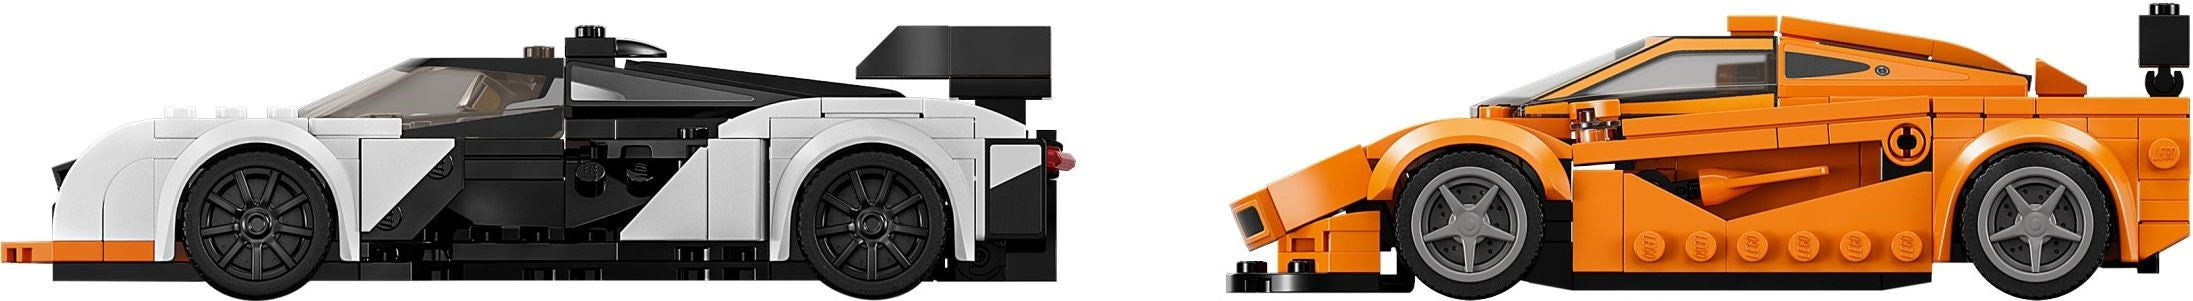 LEGO 76918 McLaren Solus GT & McLaren F1 LM